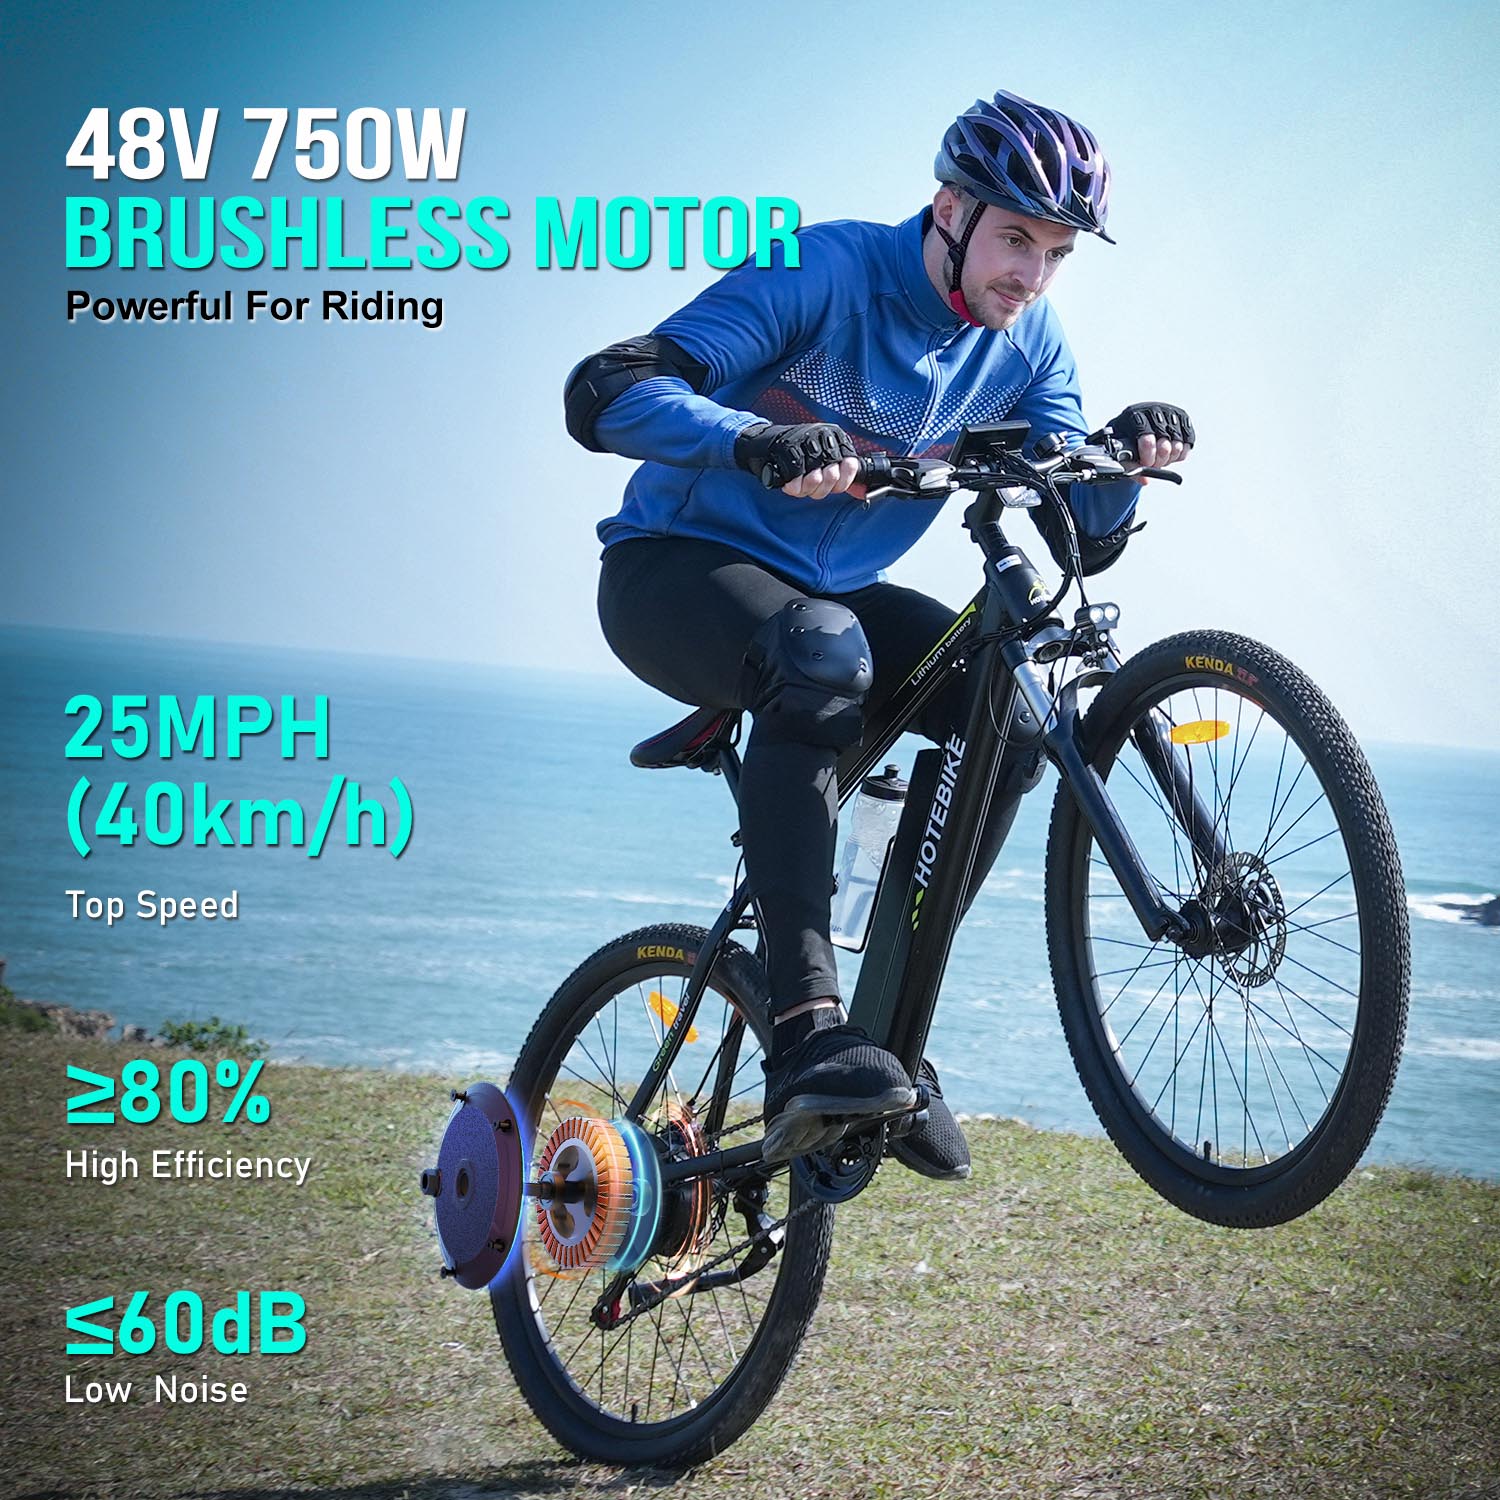 27.5″ Electric Mountain Bikes for Sale 48V 750W Hotebike Fastest E-Bike